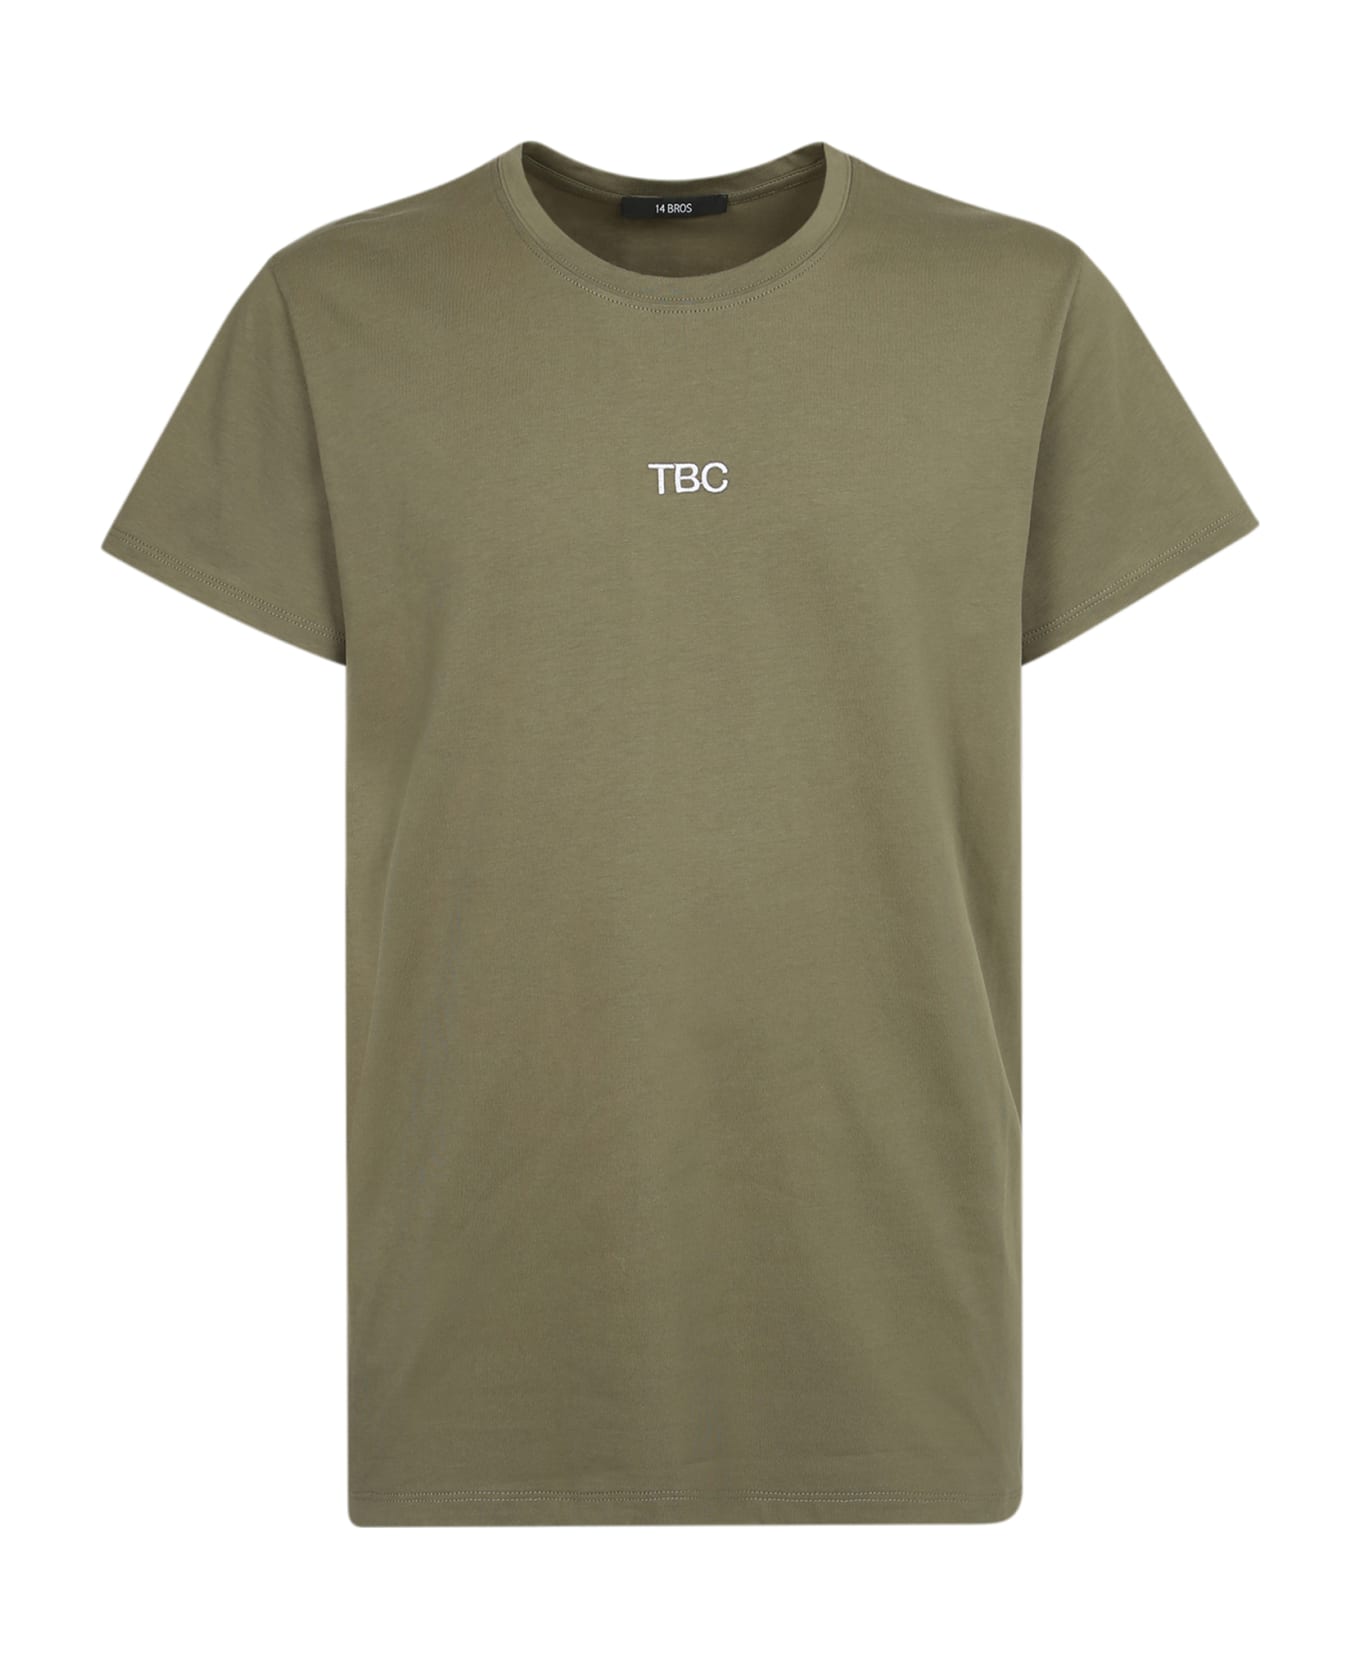 14 Bros Logo-print T-shirt - Green